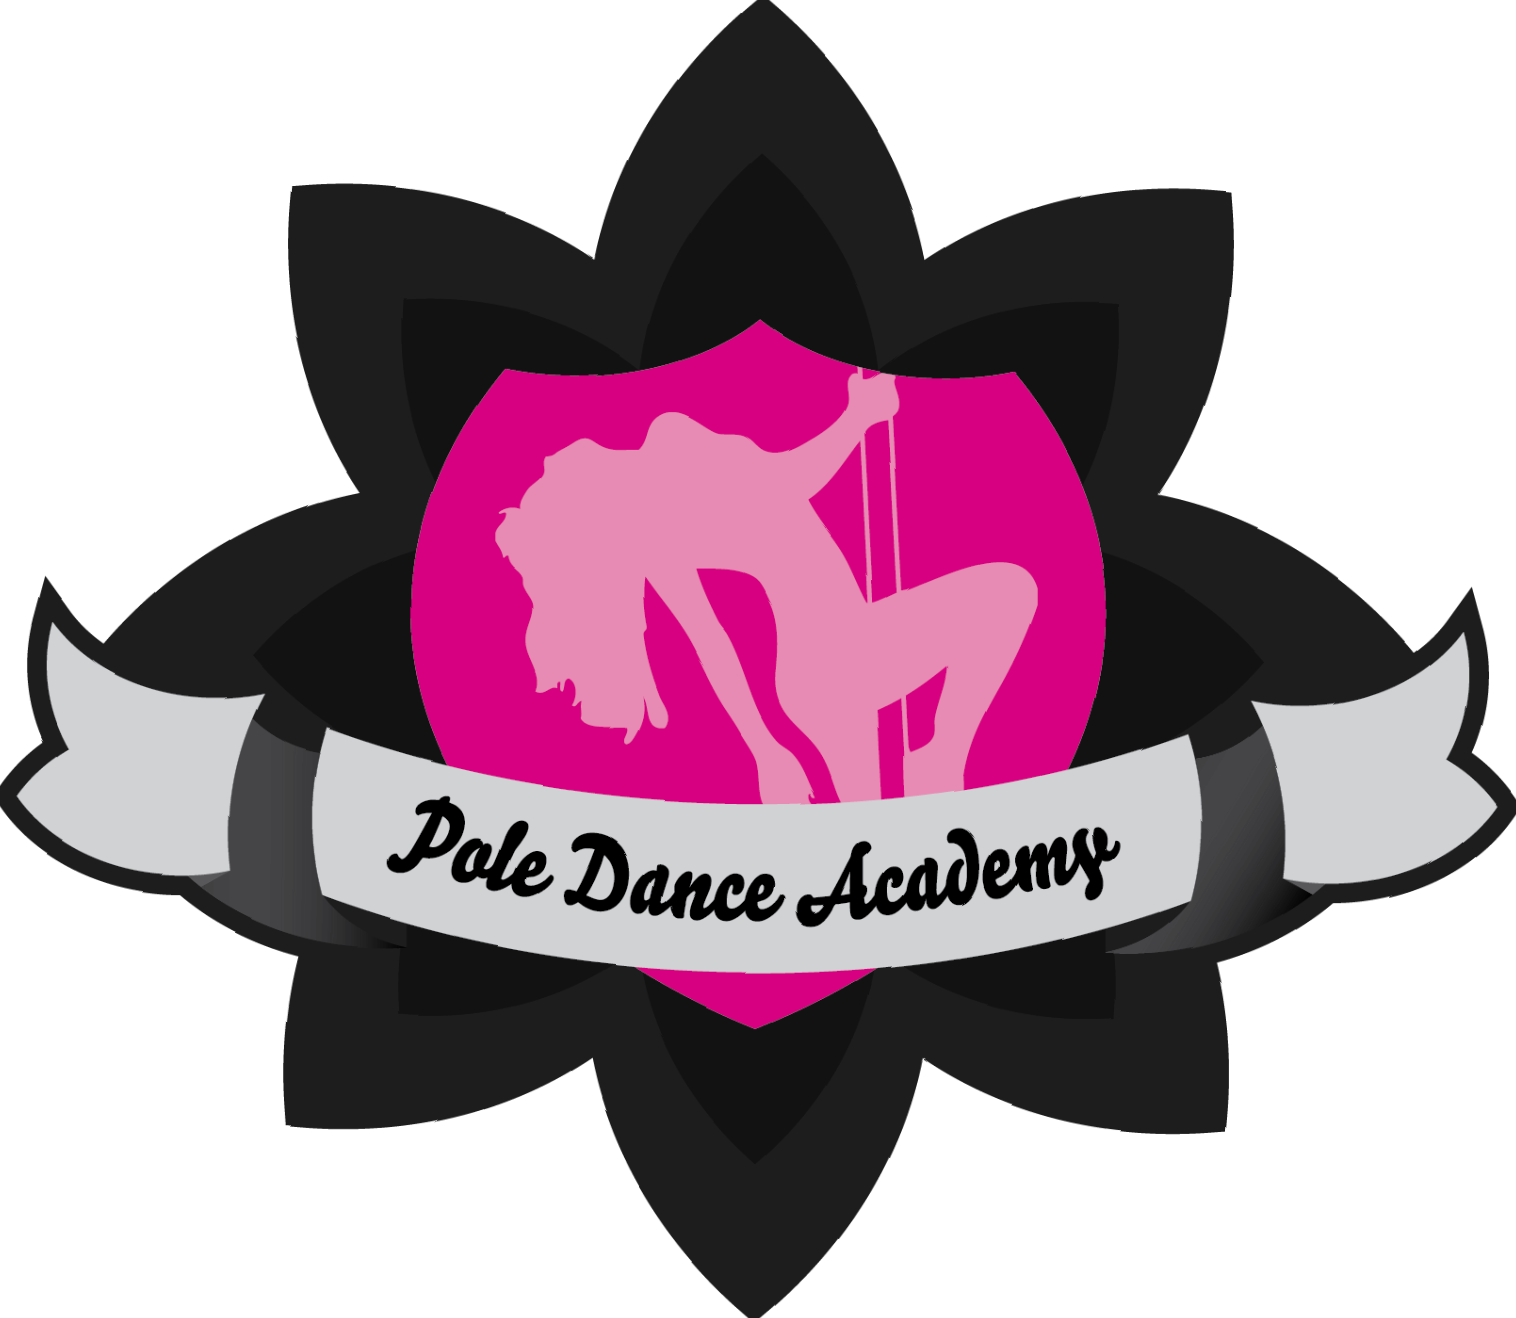 Pole Dance Academy Trnava